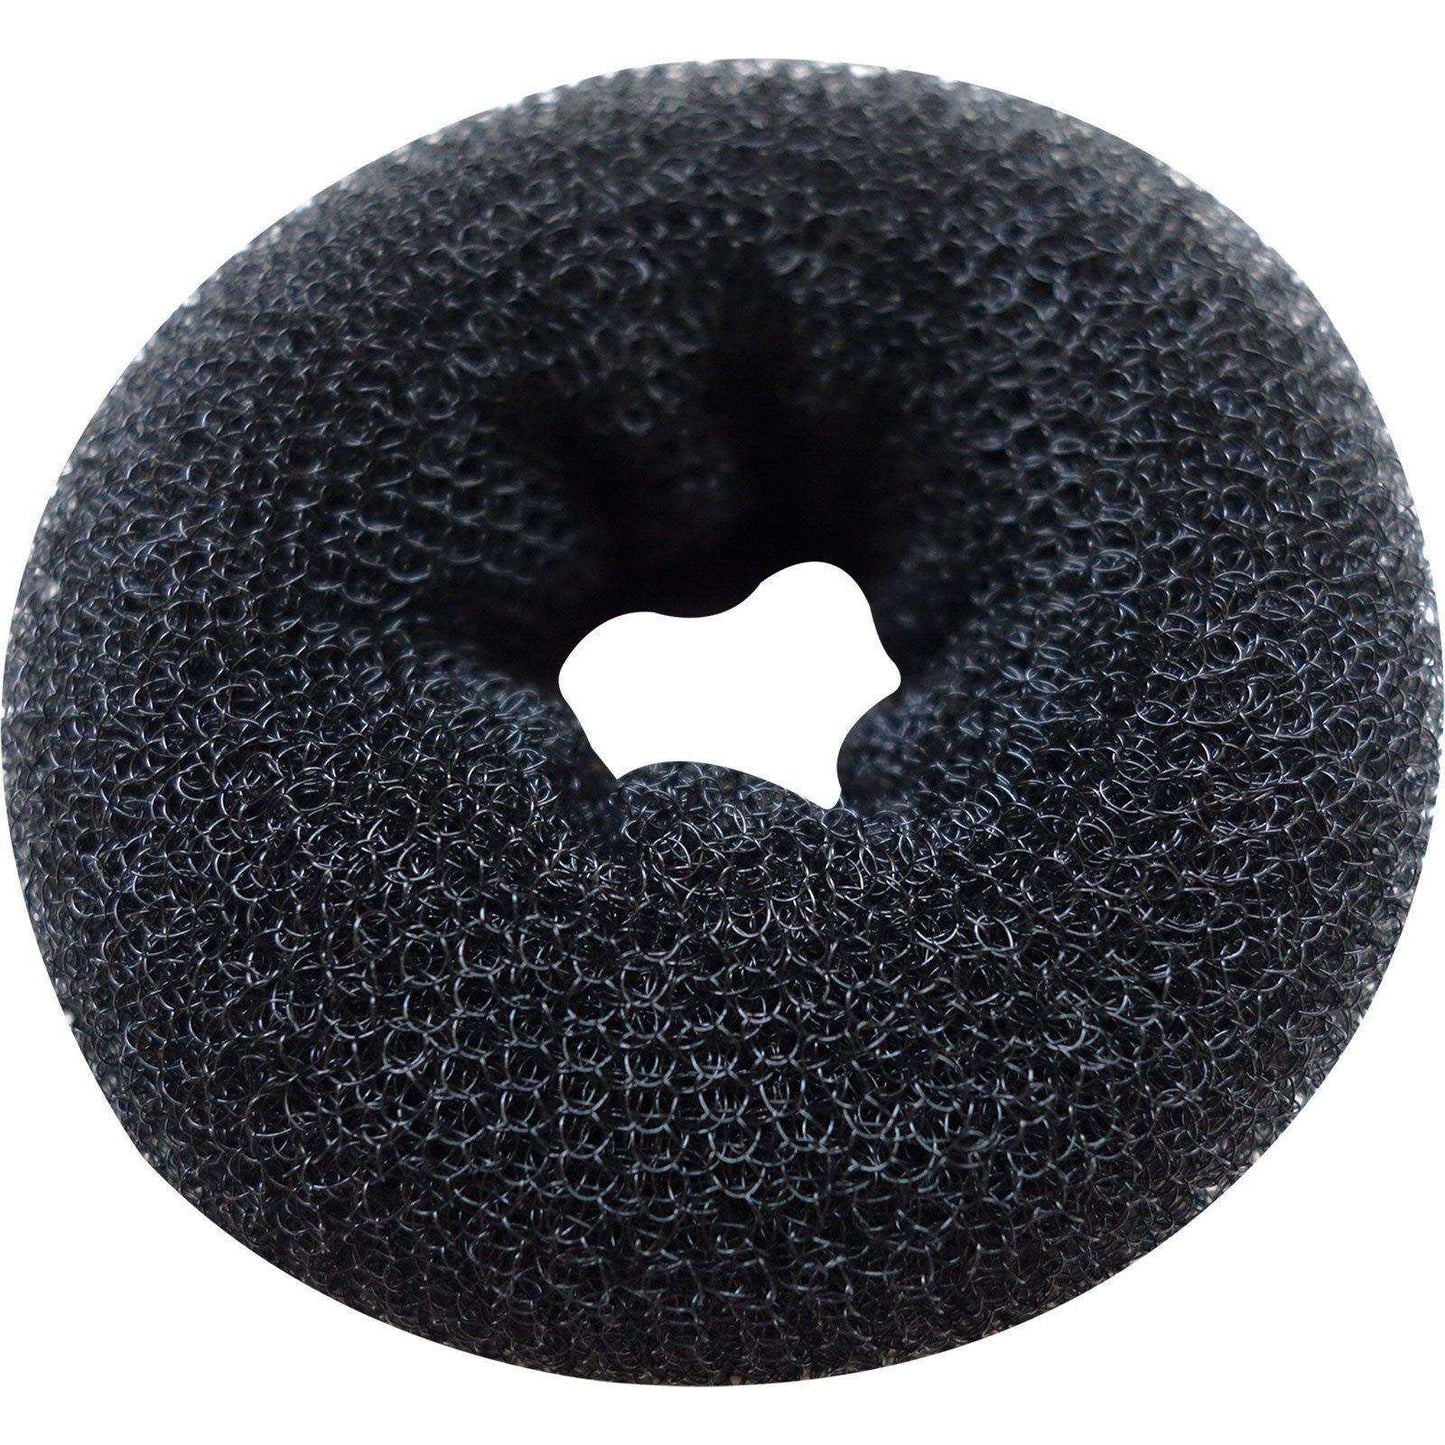 2 X Medium Black Hair Bun Donut Style Ring Girls Kids Doughnut Style Accessories